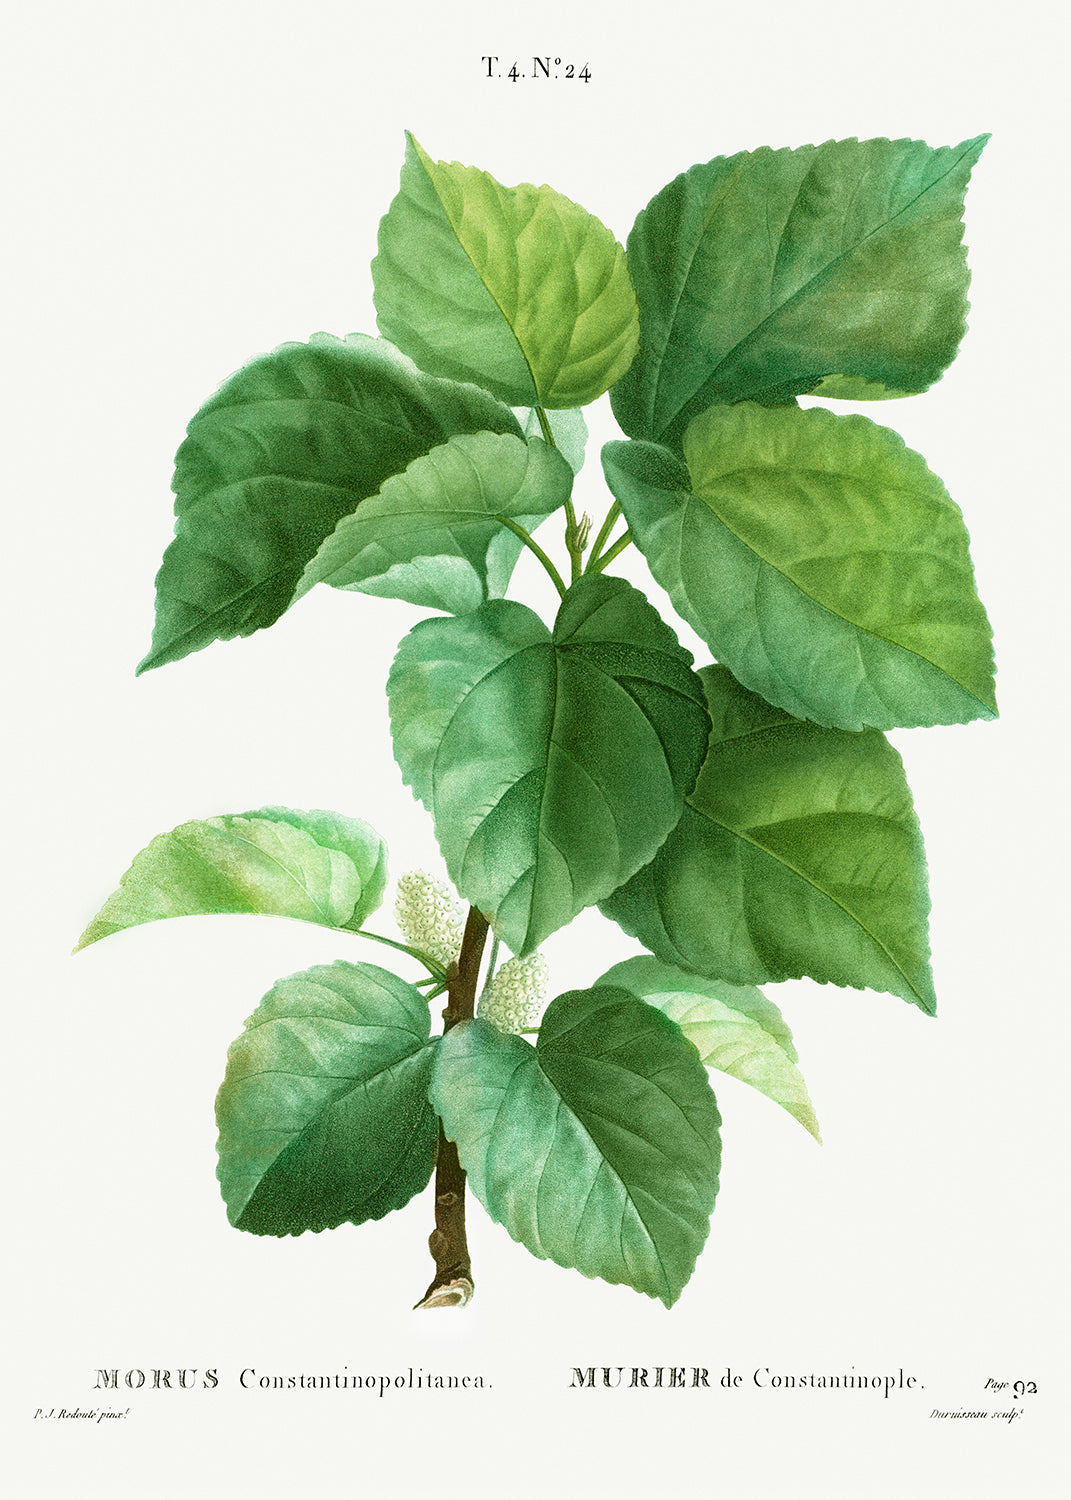 Botanical Plant Print - White mulberry (Morus Constantinopolitanea) by Pierre Joseph Redoute